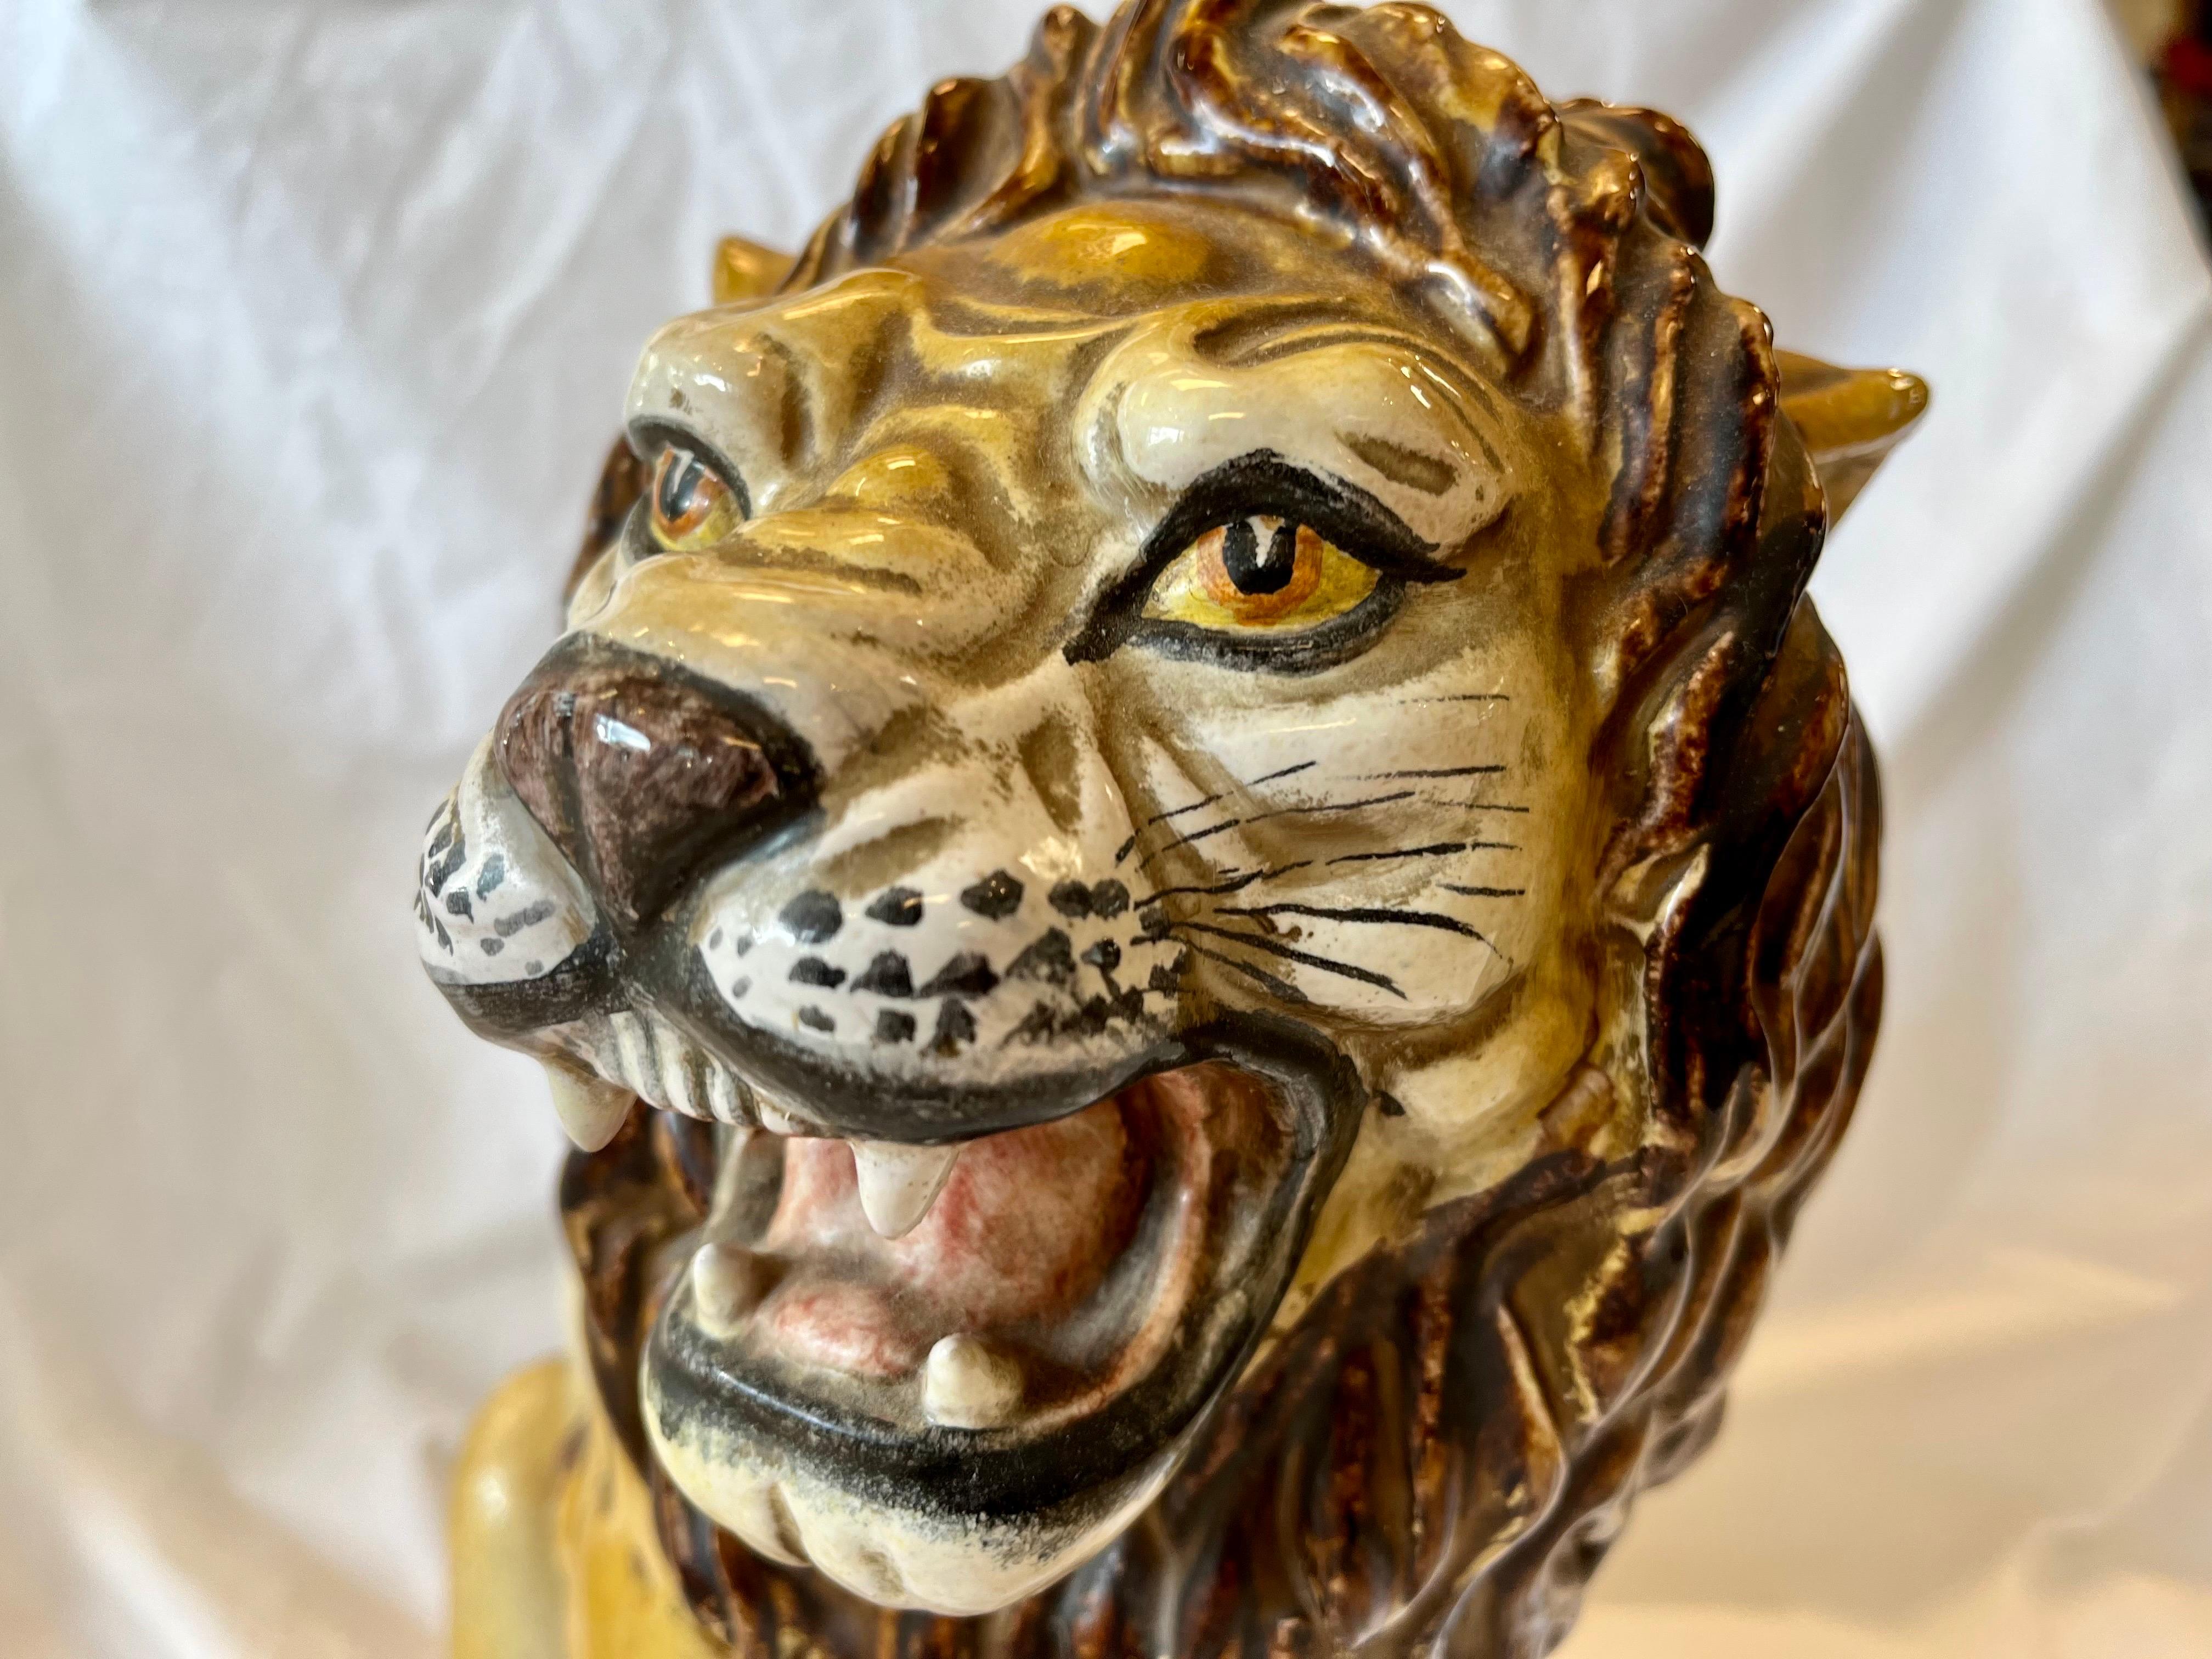 Italian Majolica Midcentury Terracotta Glazed Roaring Seated Lion Sculpture For Sale 1